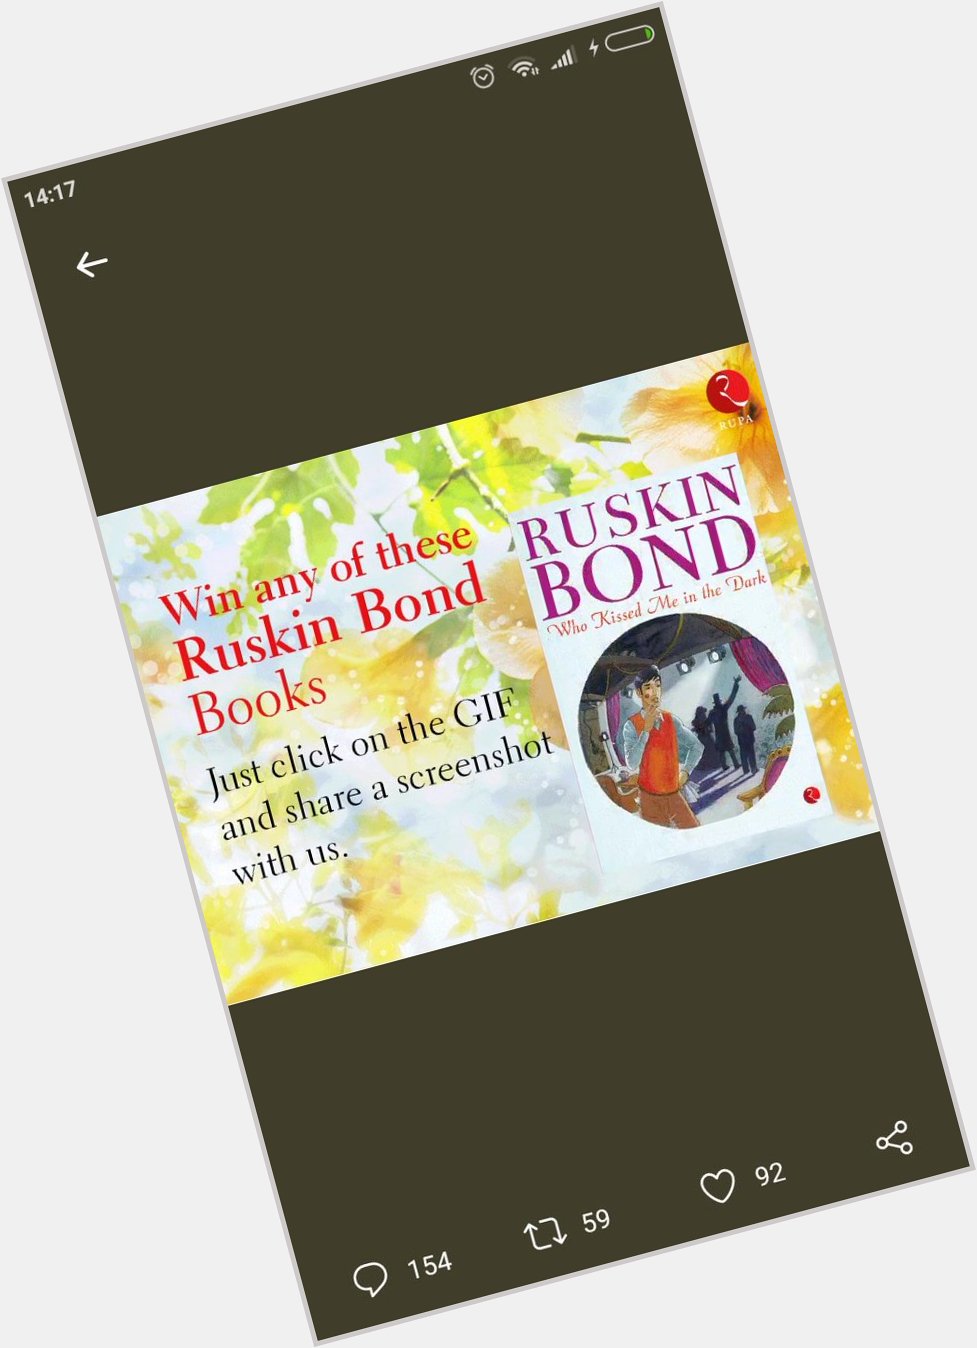  Happy birthday Ruskin Bond. 